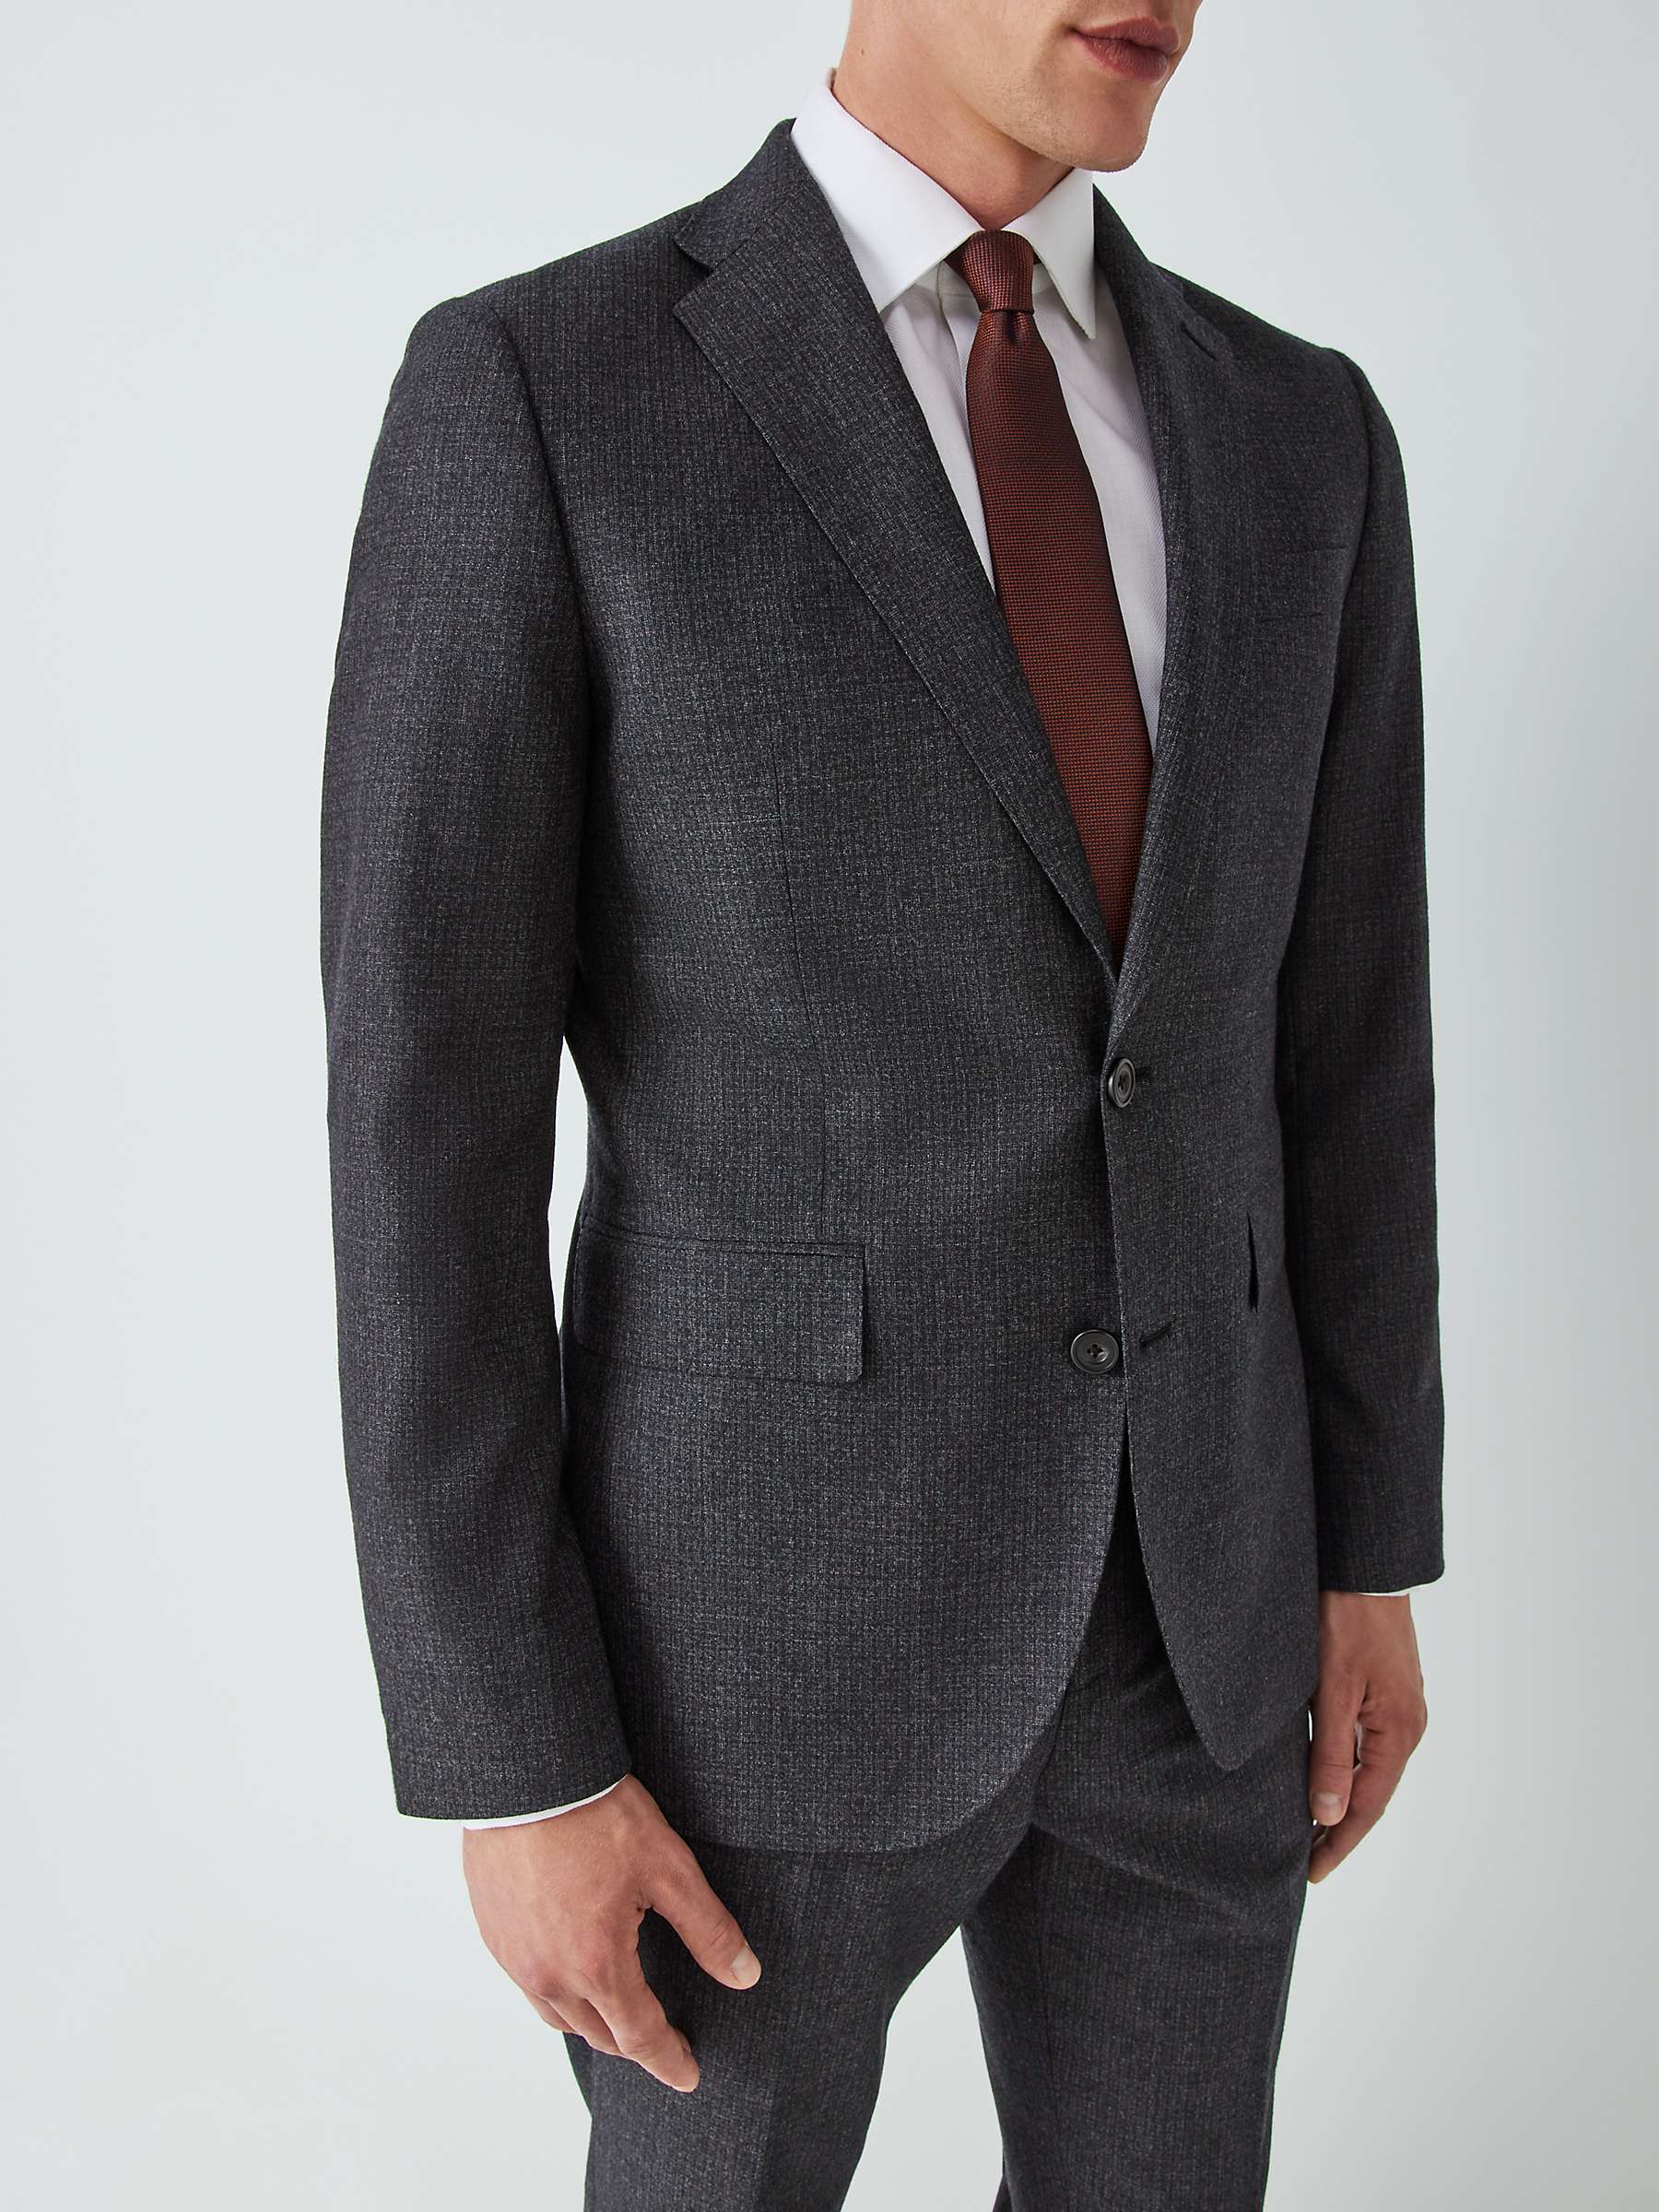 Buy John Lewis Zegna Recycled Wool Regular Fit Suit Jacket Online at johnlewis.com